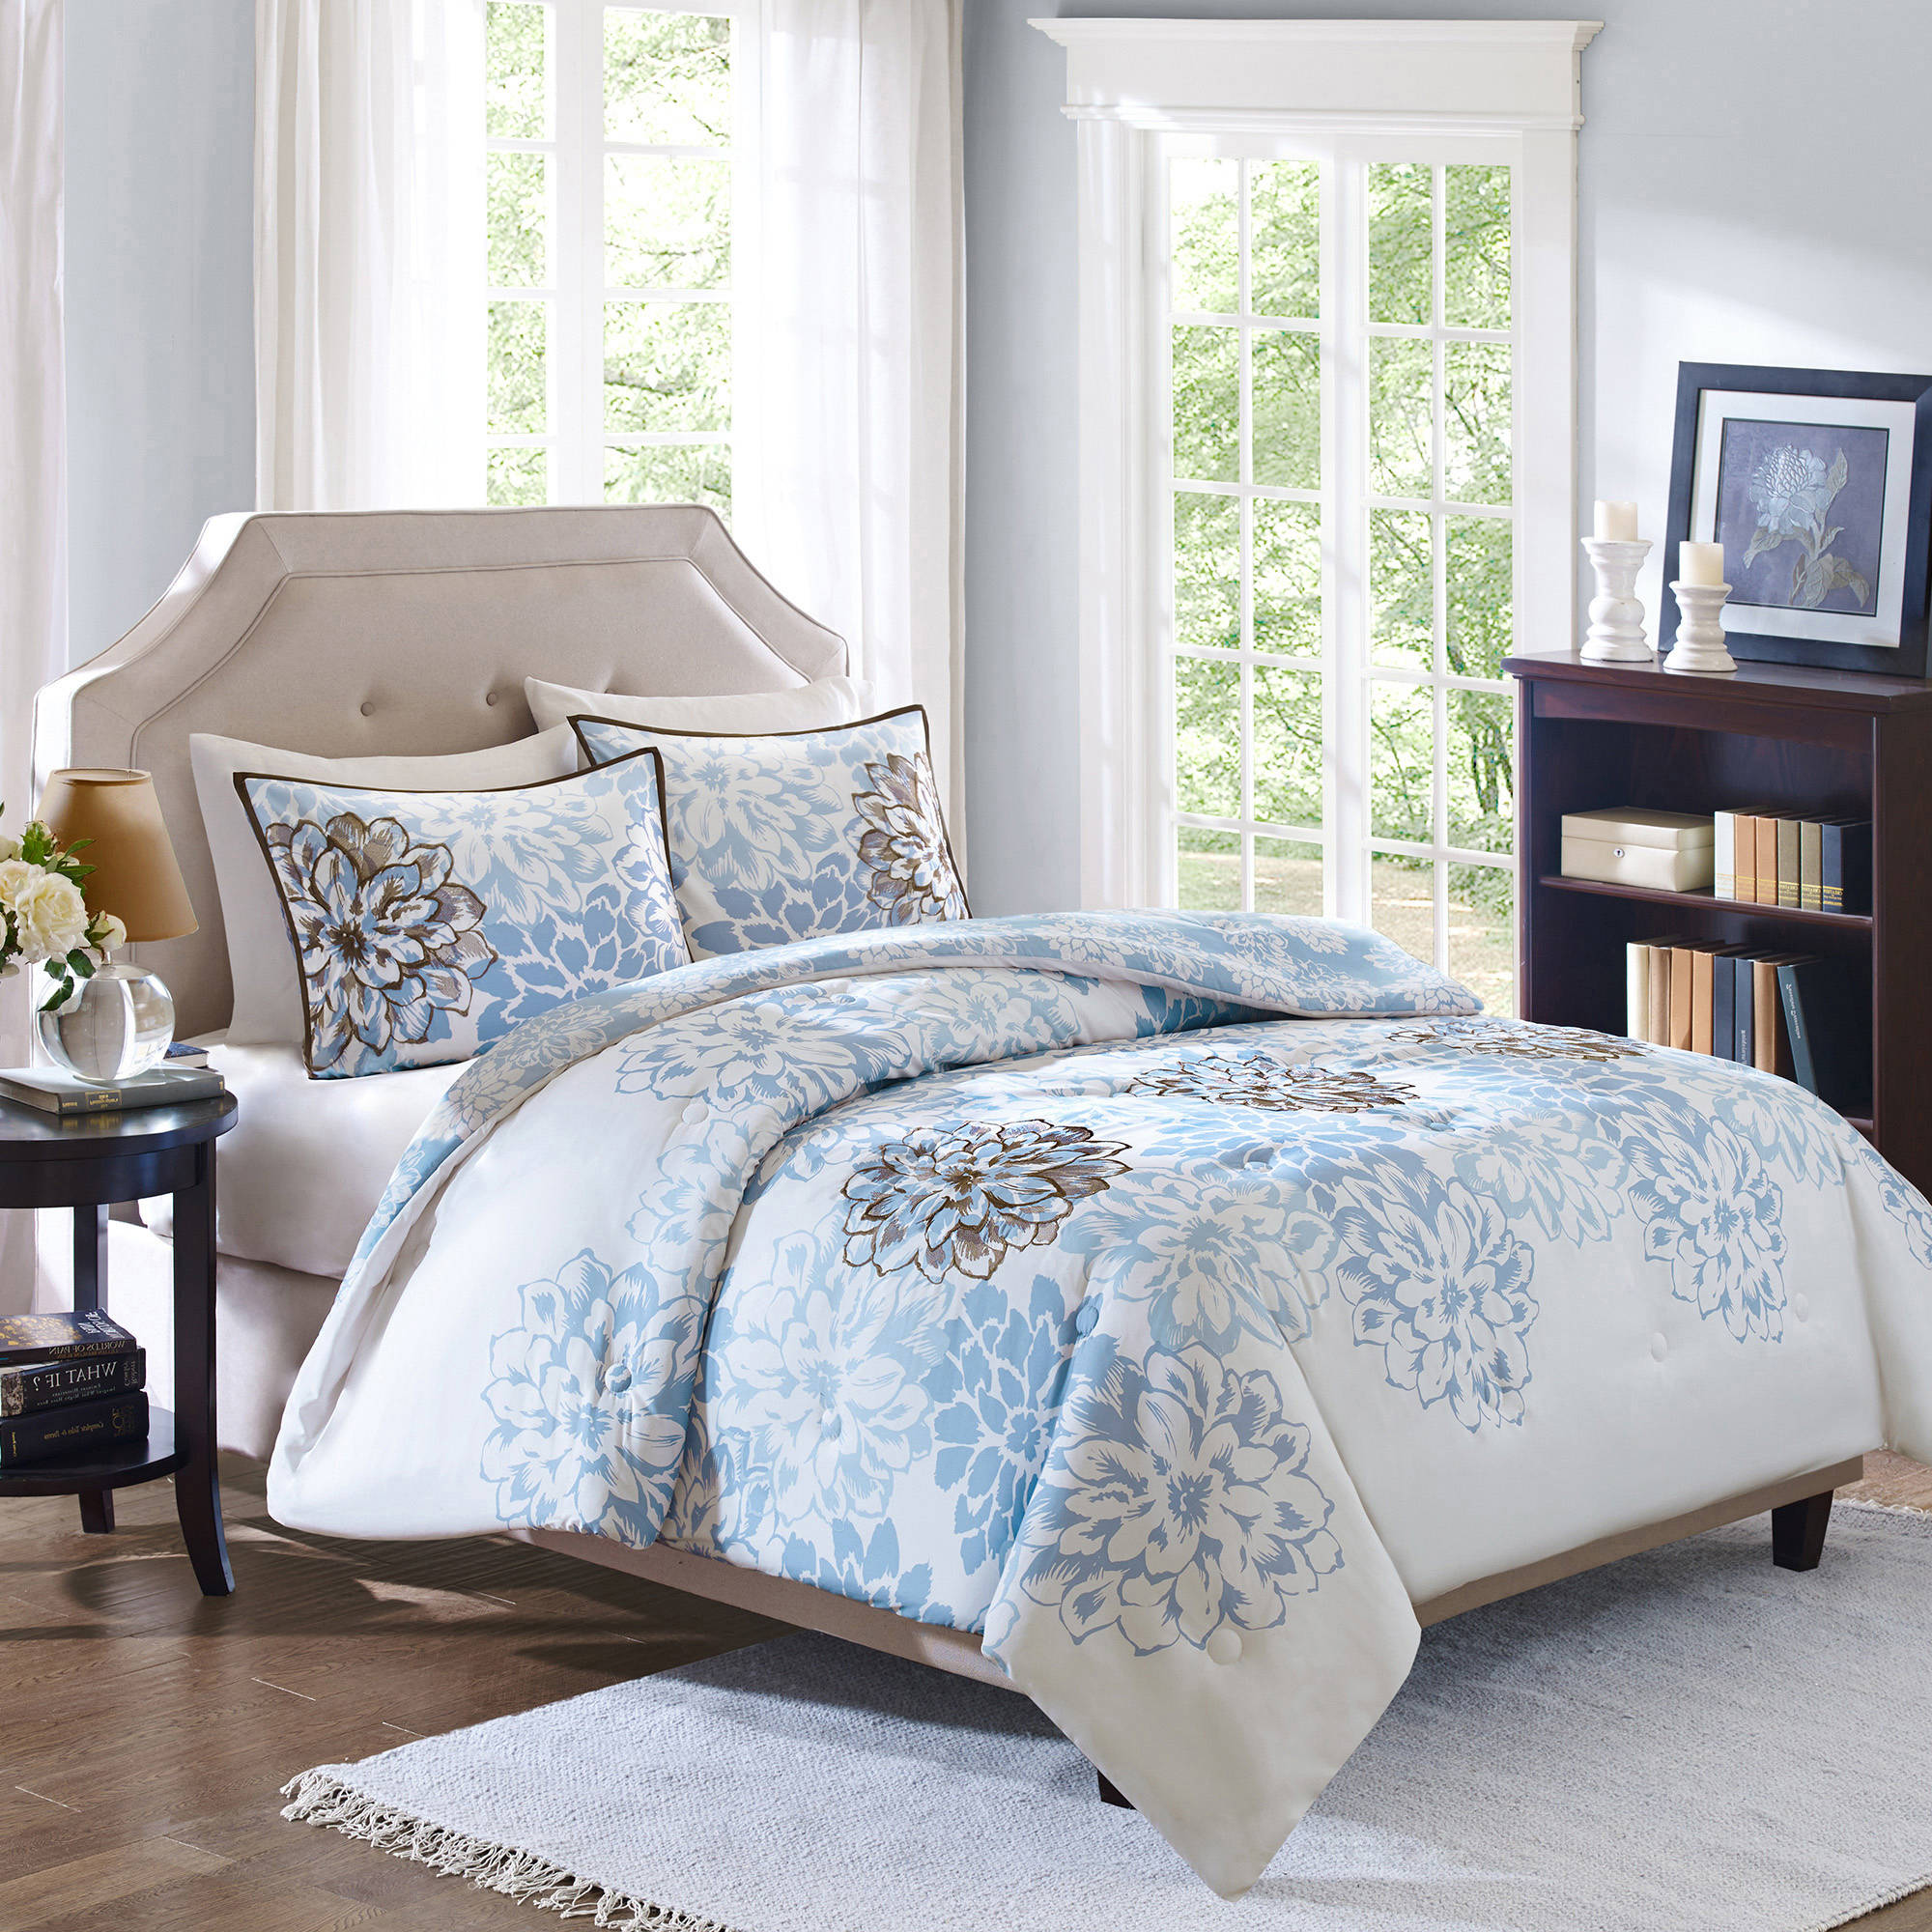 Better Homes & Gardens Twin Capri Reversible Comforter Set, 3 Piece - image 1 of 2